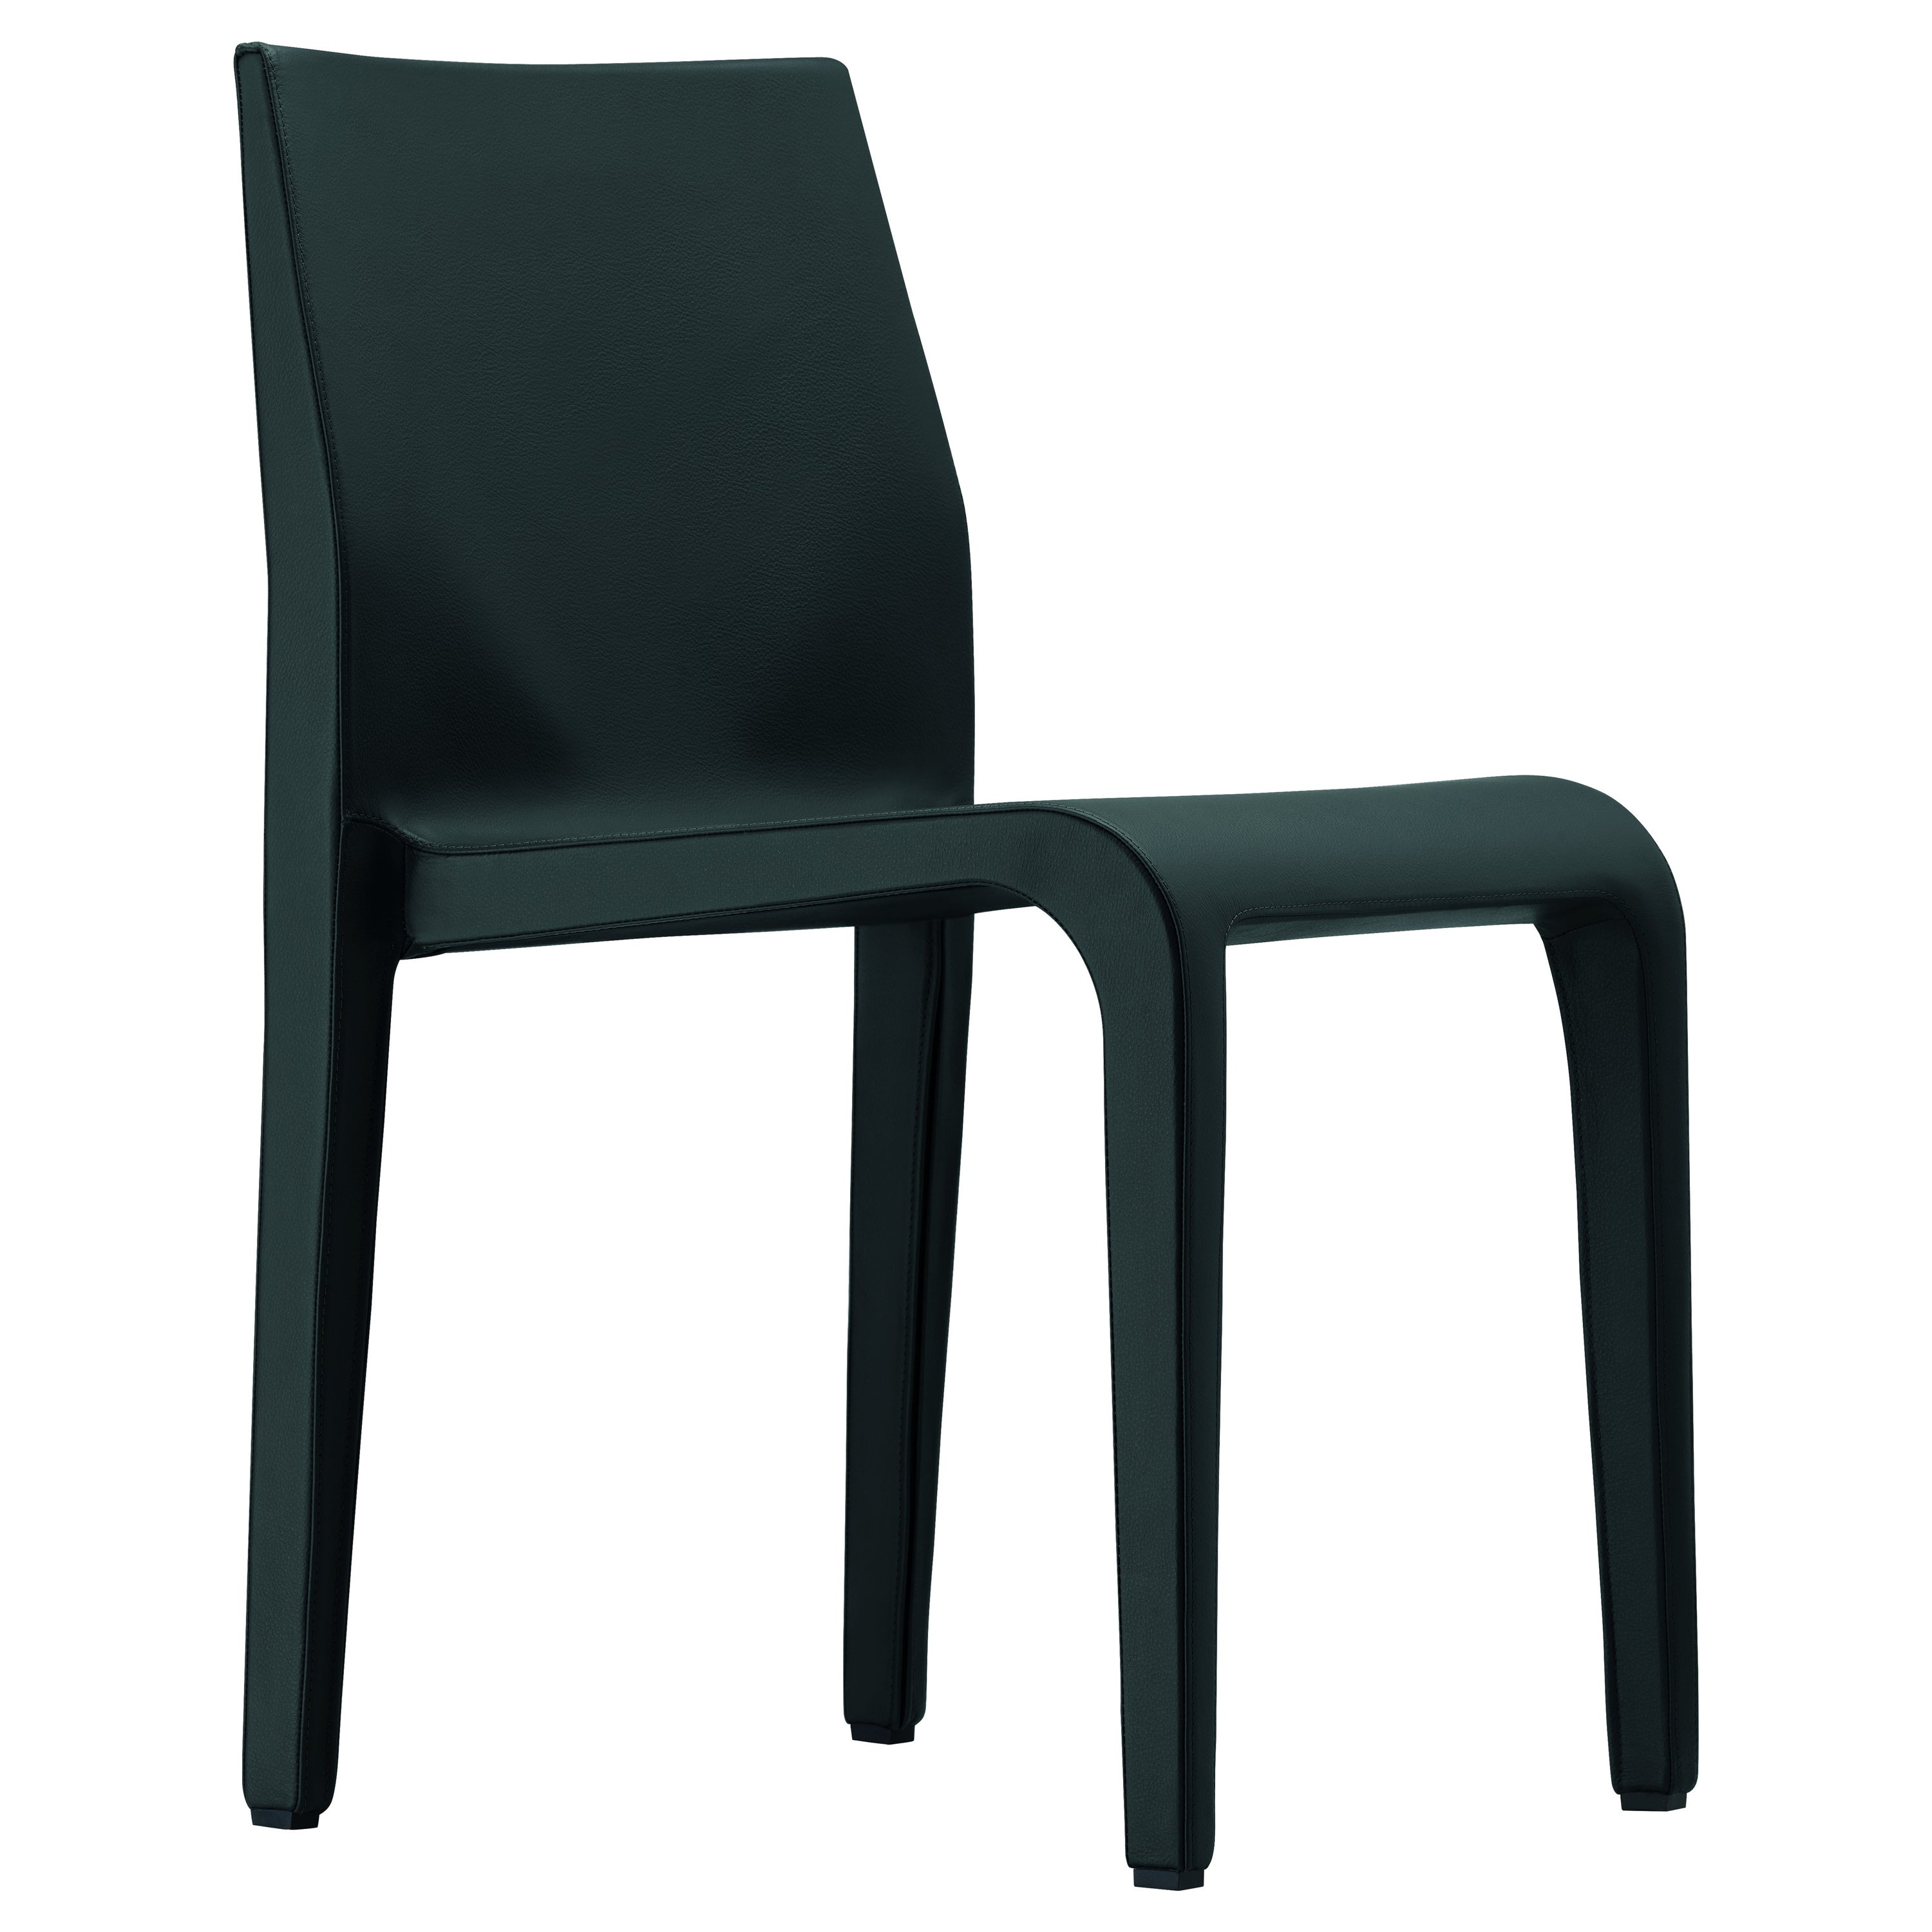 Alias 301 Laleggera Stuhl aus schwarzem Vollschwarzem Leder von Riccardo Blumer im Angebot